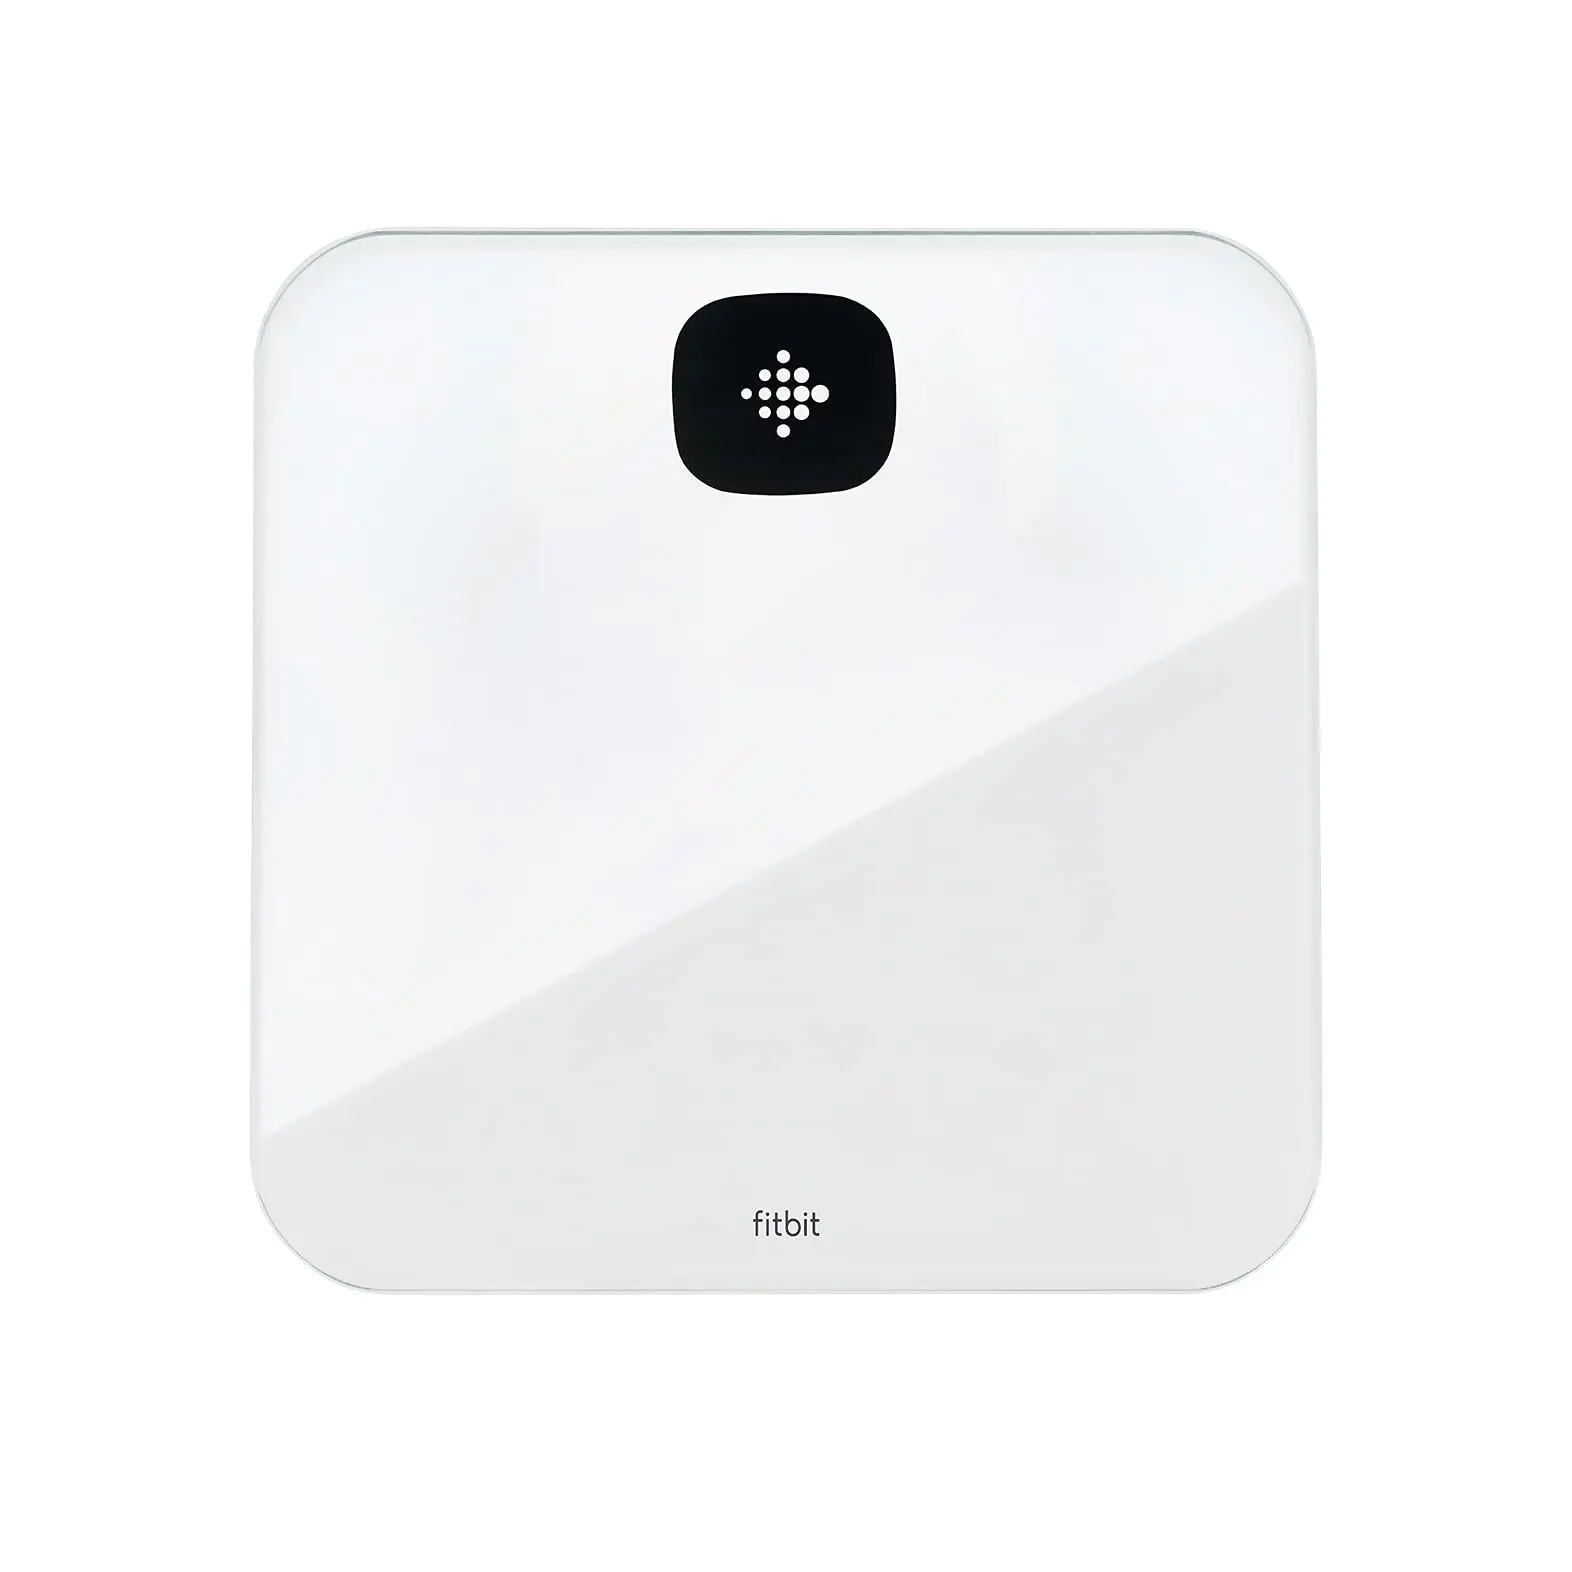 báscula inteligente fitbit aria con wifi - Cómo configurar Fitbit Aria